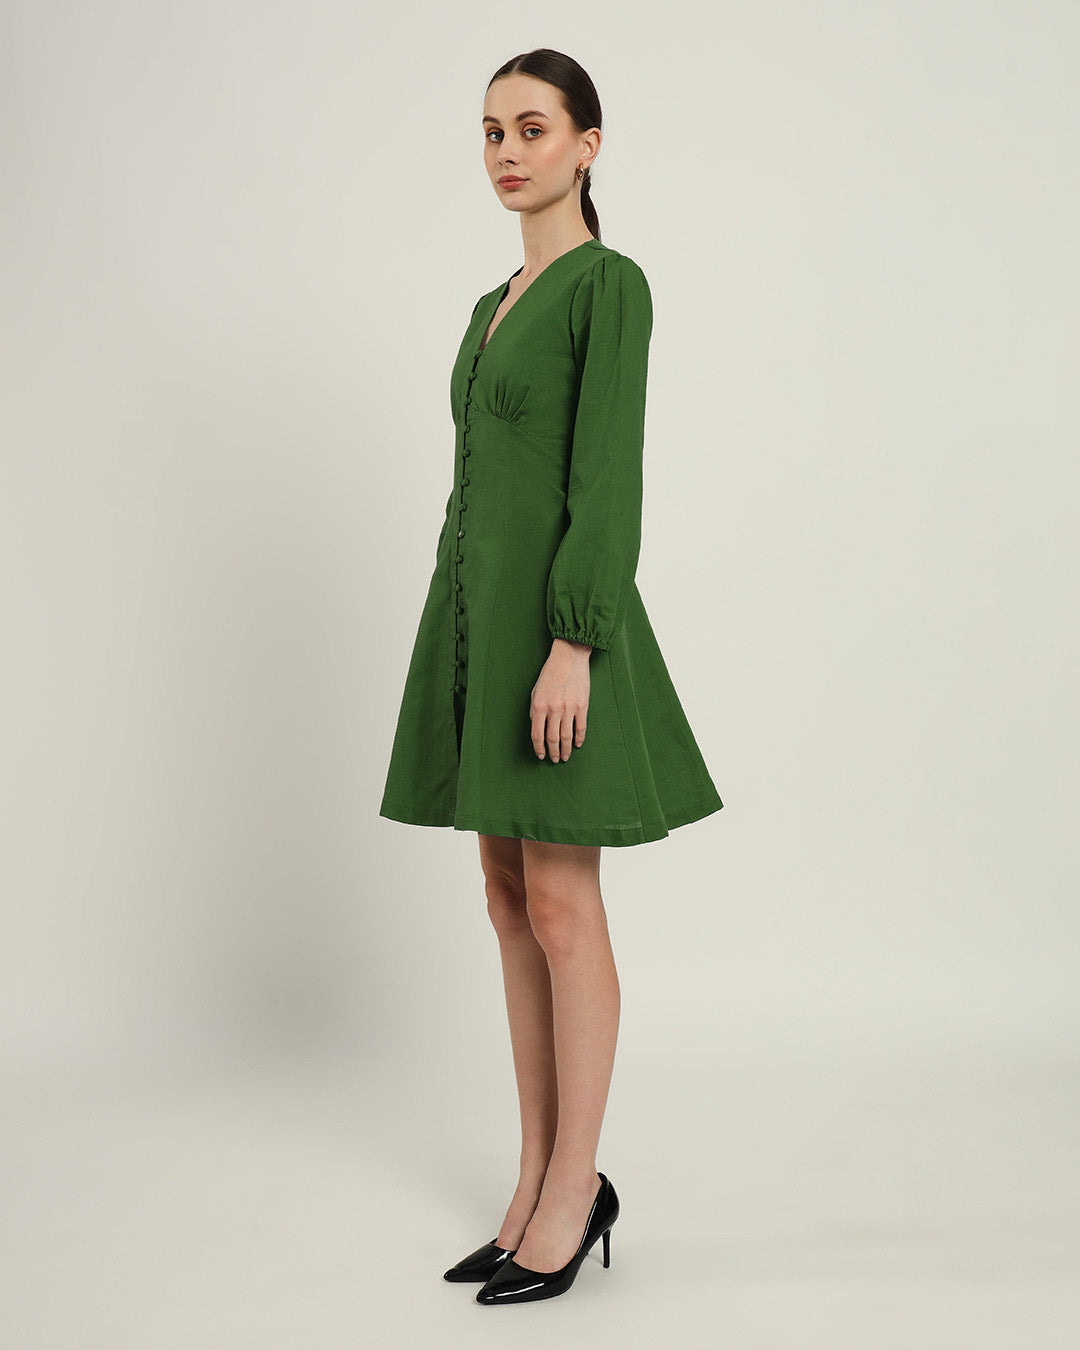 The Dafni Emerald Dress